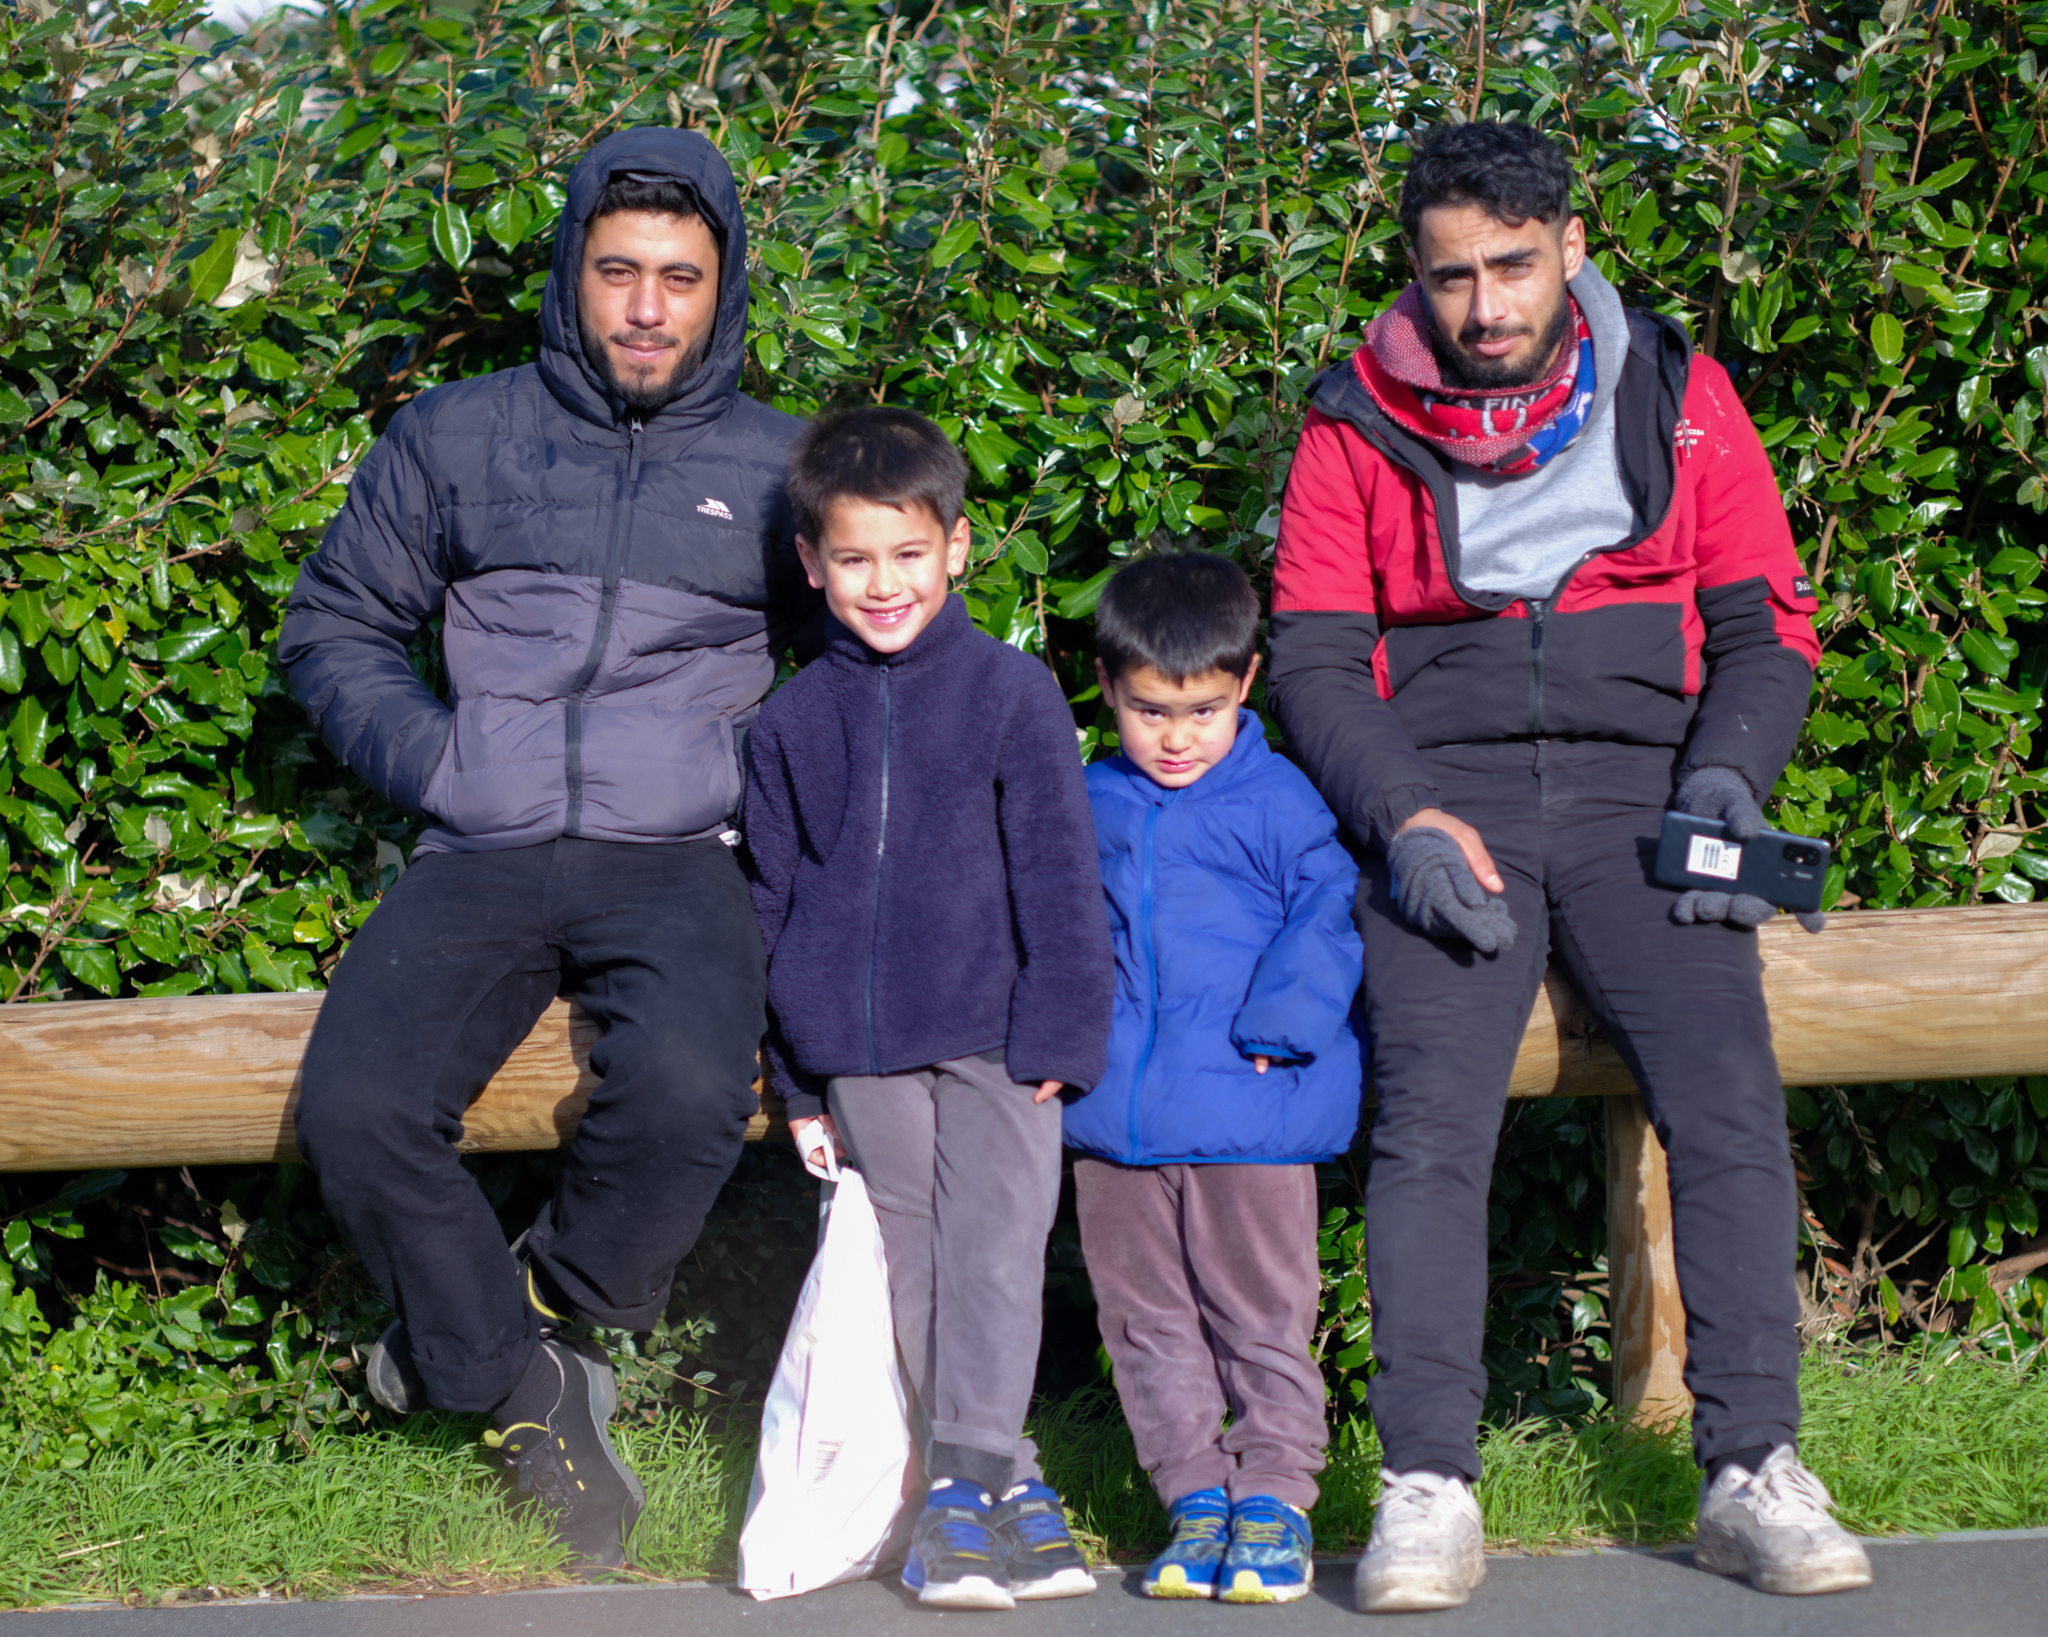 0SSA1255 シリア人移民との思い出【イギリス取材レポート-7】 シリア人移民との思い出【イギリス取材レポート-7】